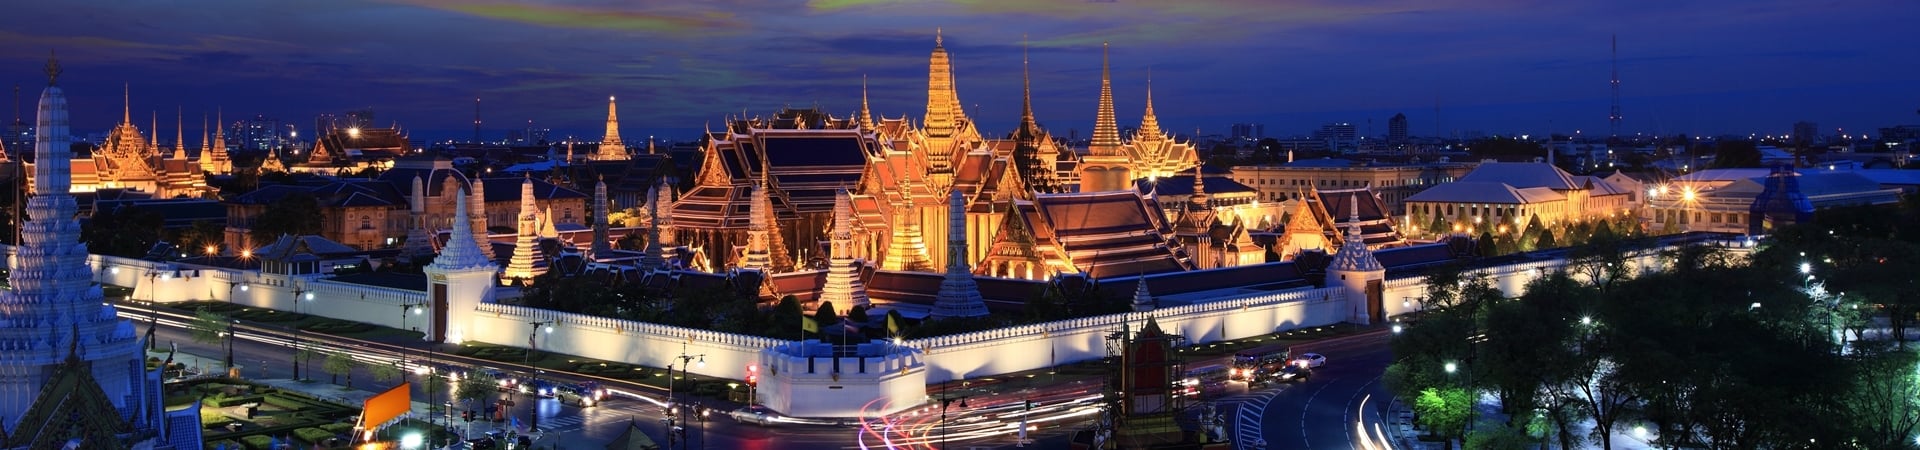 Image of Glowing Bangkok (Public Transport)